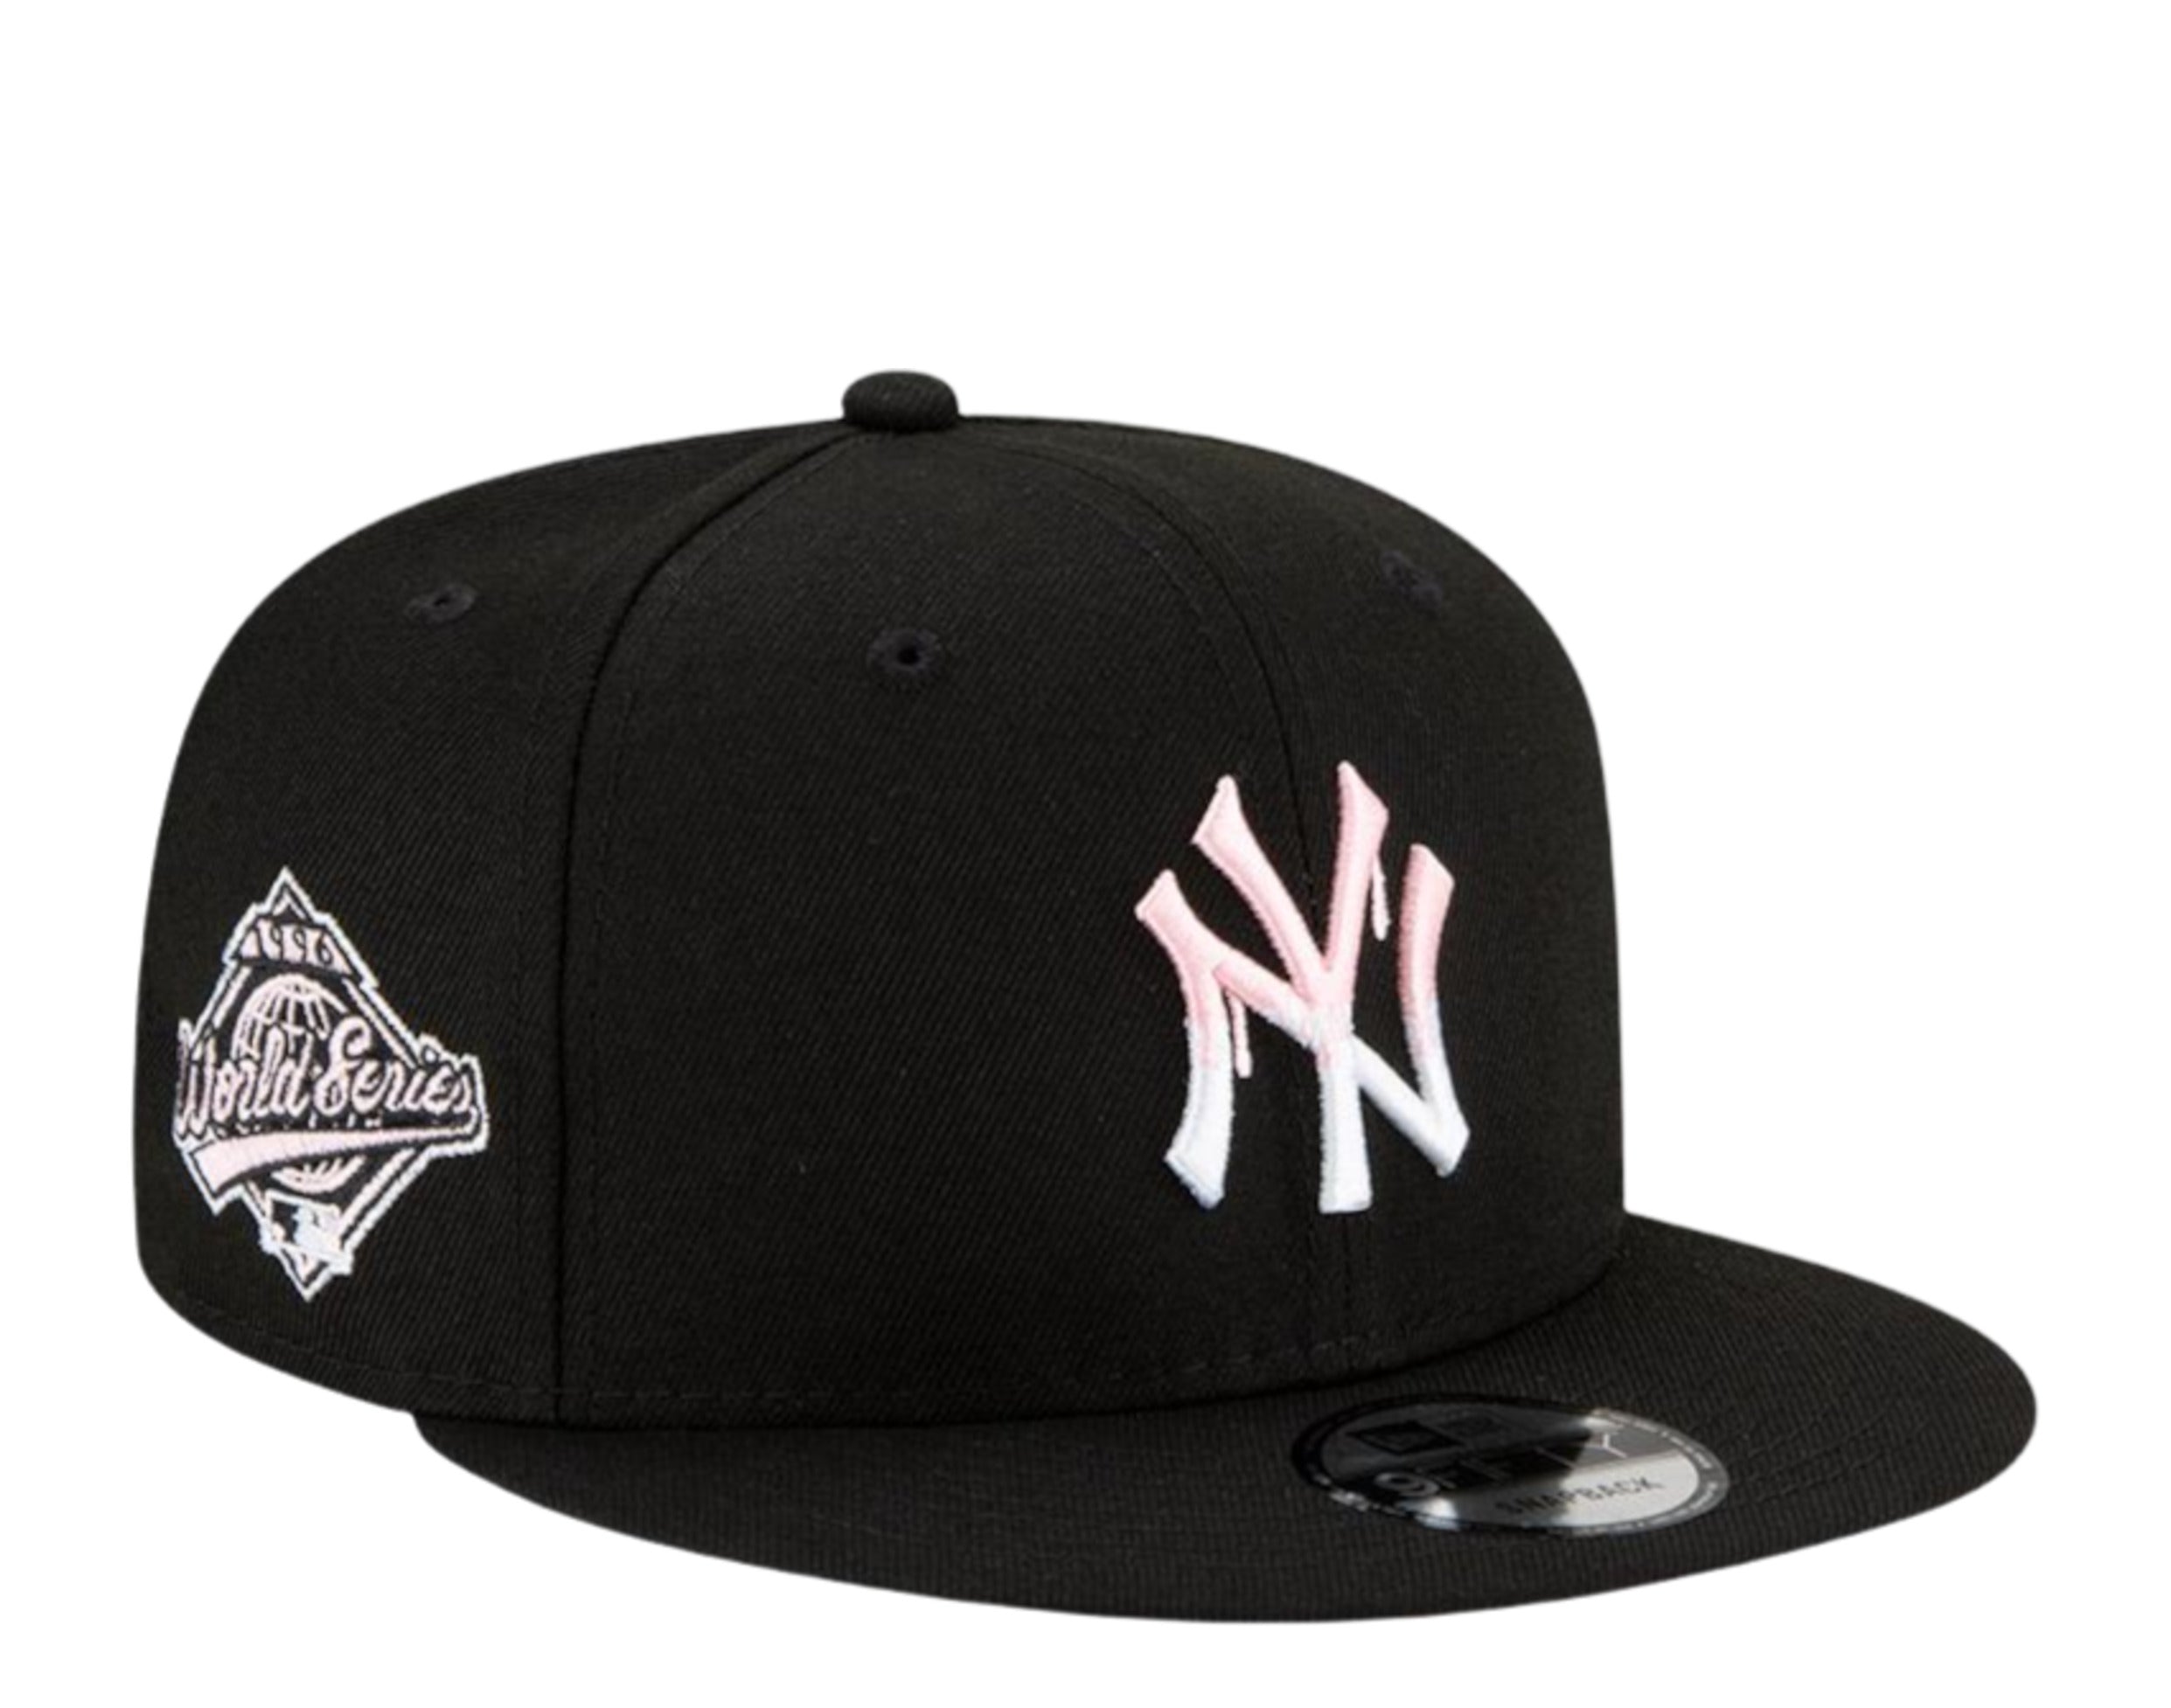 YSL snapback hats (1)  Snapback hats, New era hats, Fitted hats